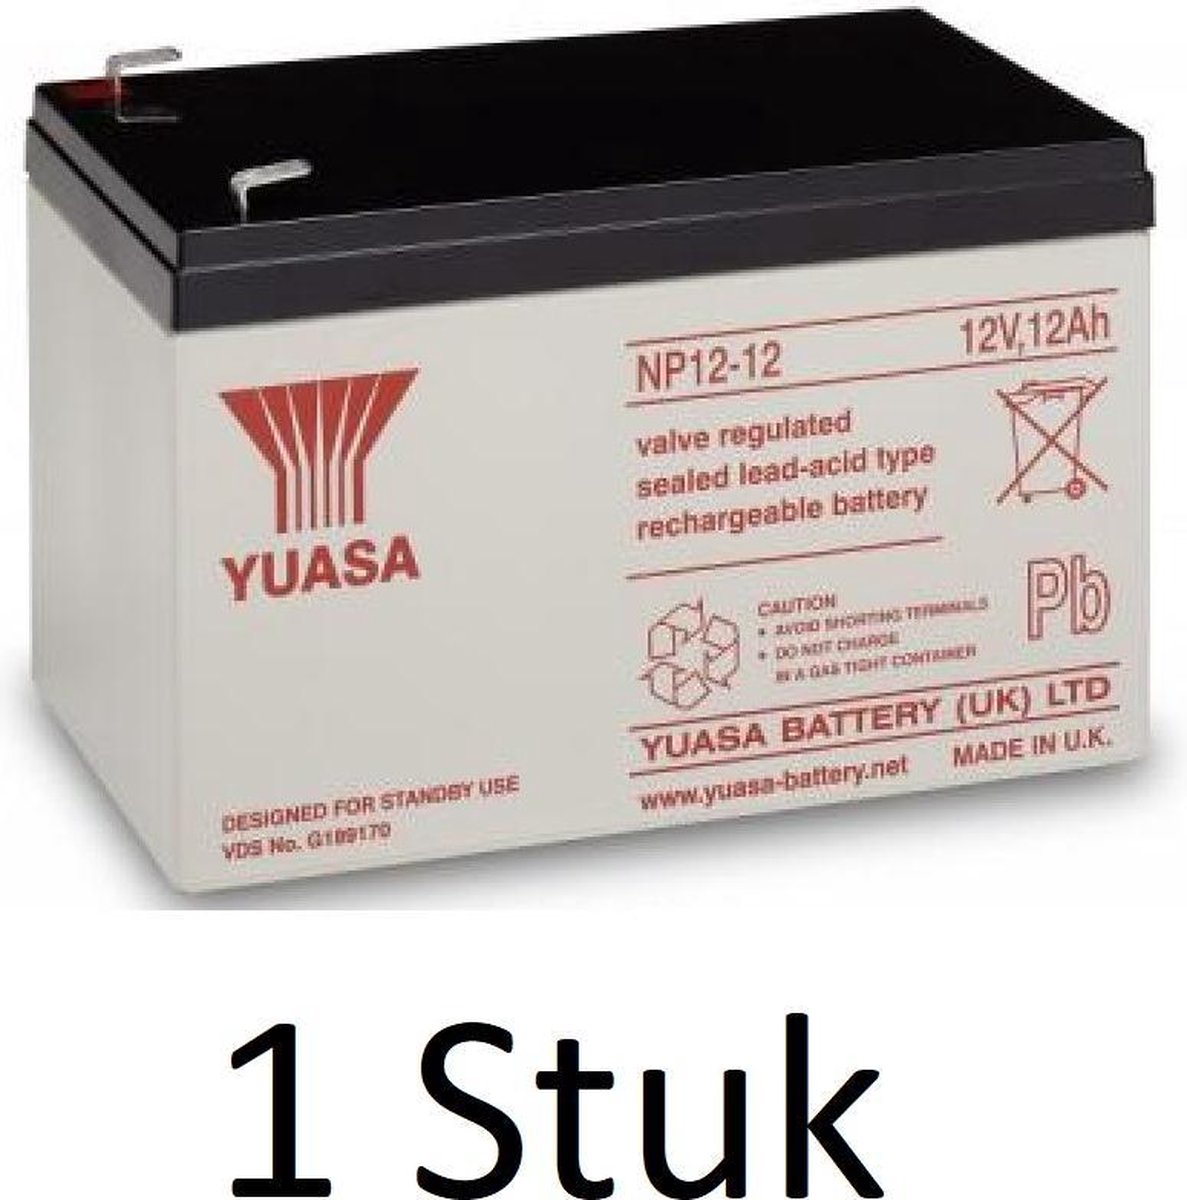 1 Stuk Yuasa lead-acid Batterij NP12-12